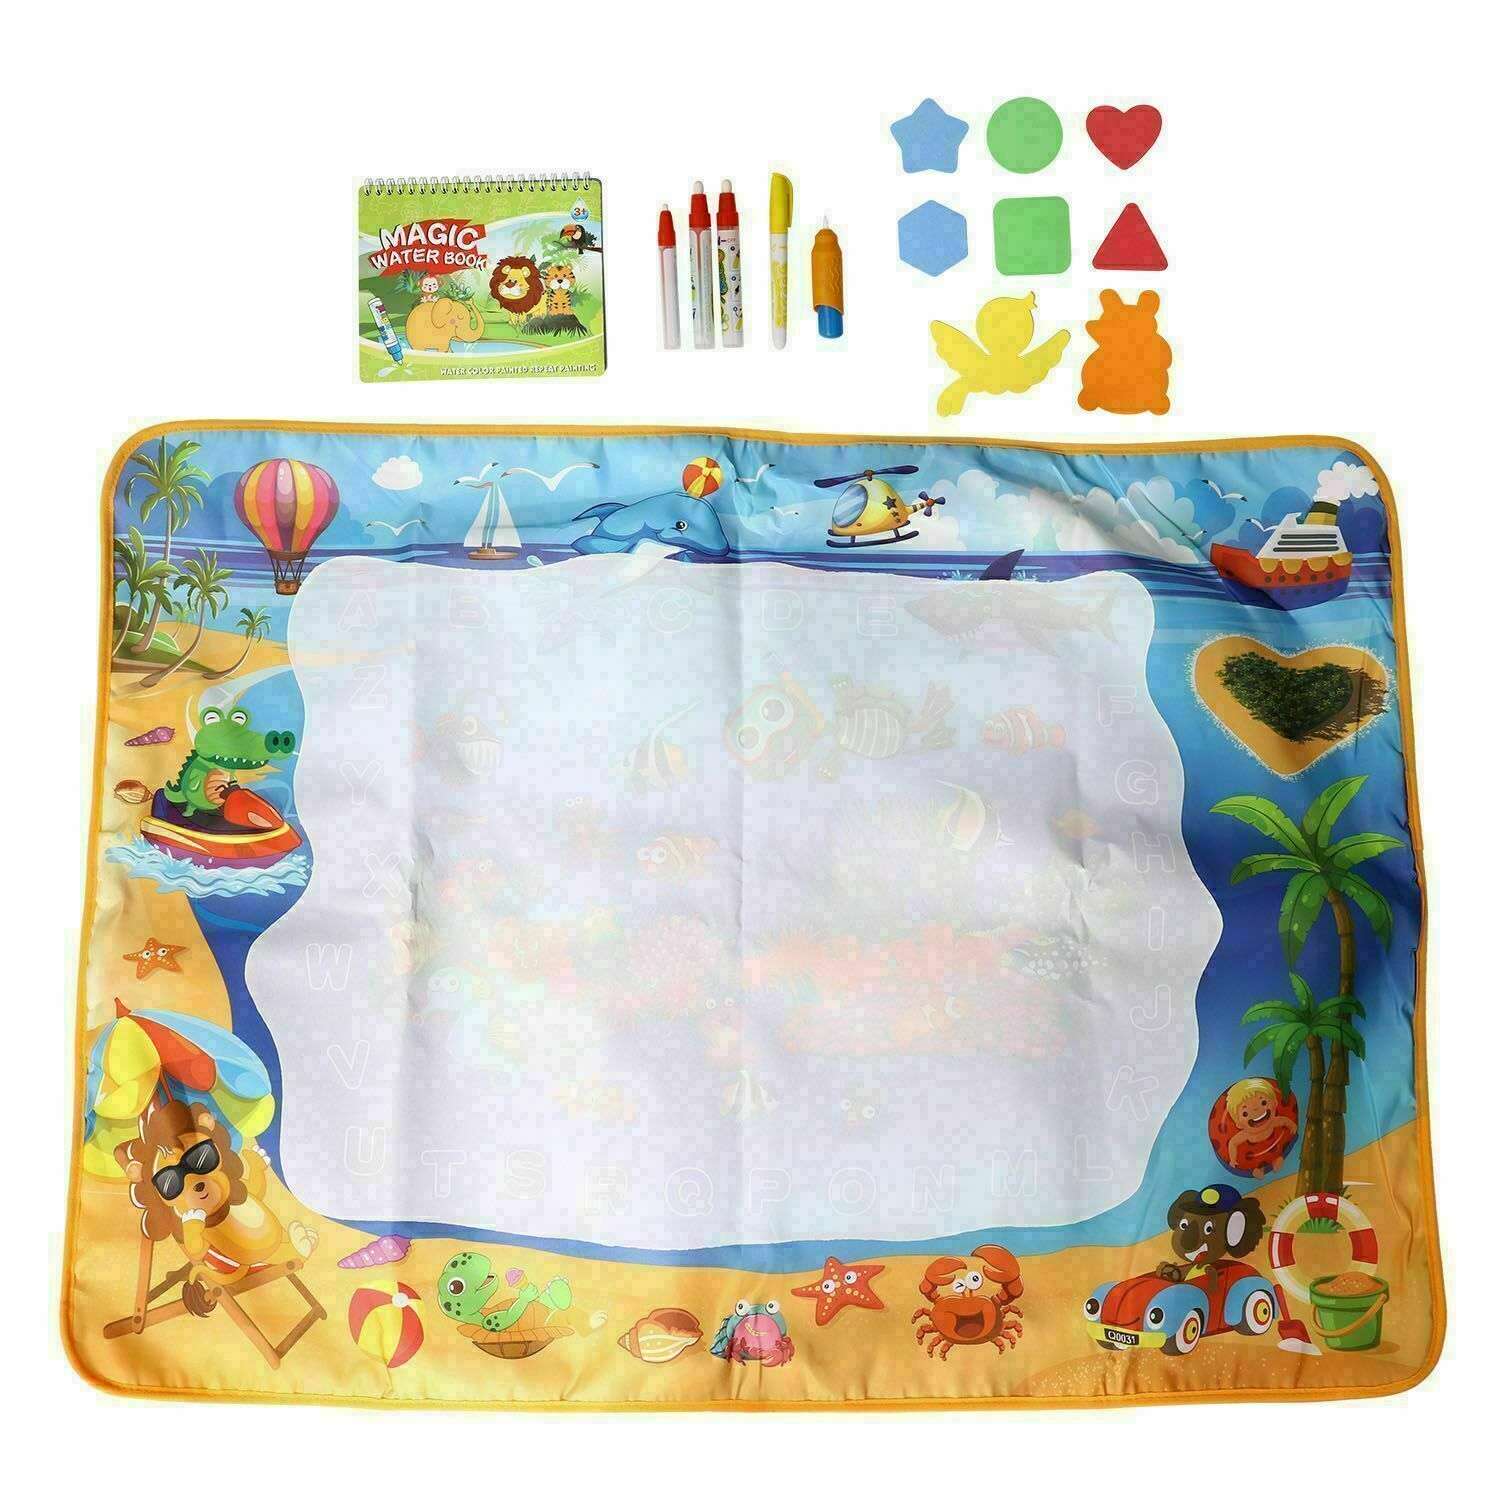 150X100CM LARGE MAGIC Water Drawing Painting Mat Kids Aqua Doodle Board Toy  +Pen $44.54 - PicClick AU